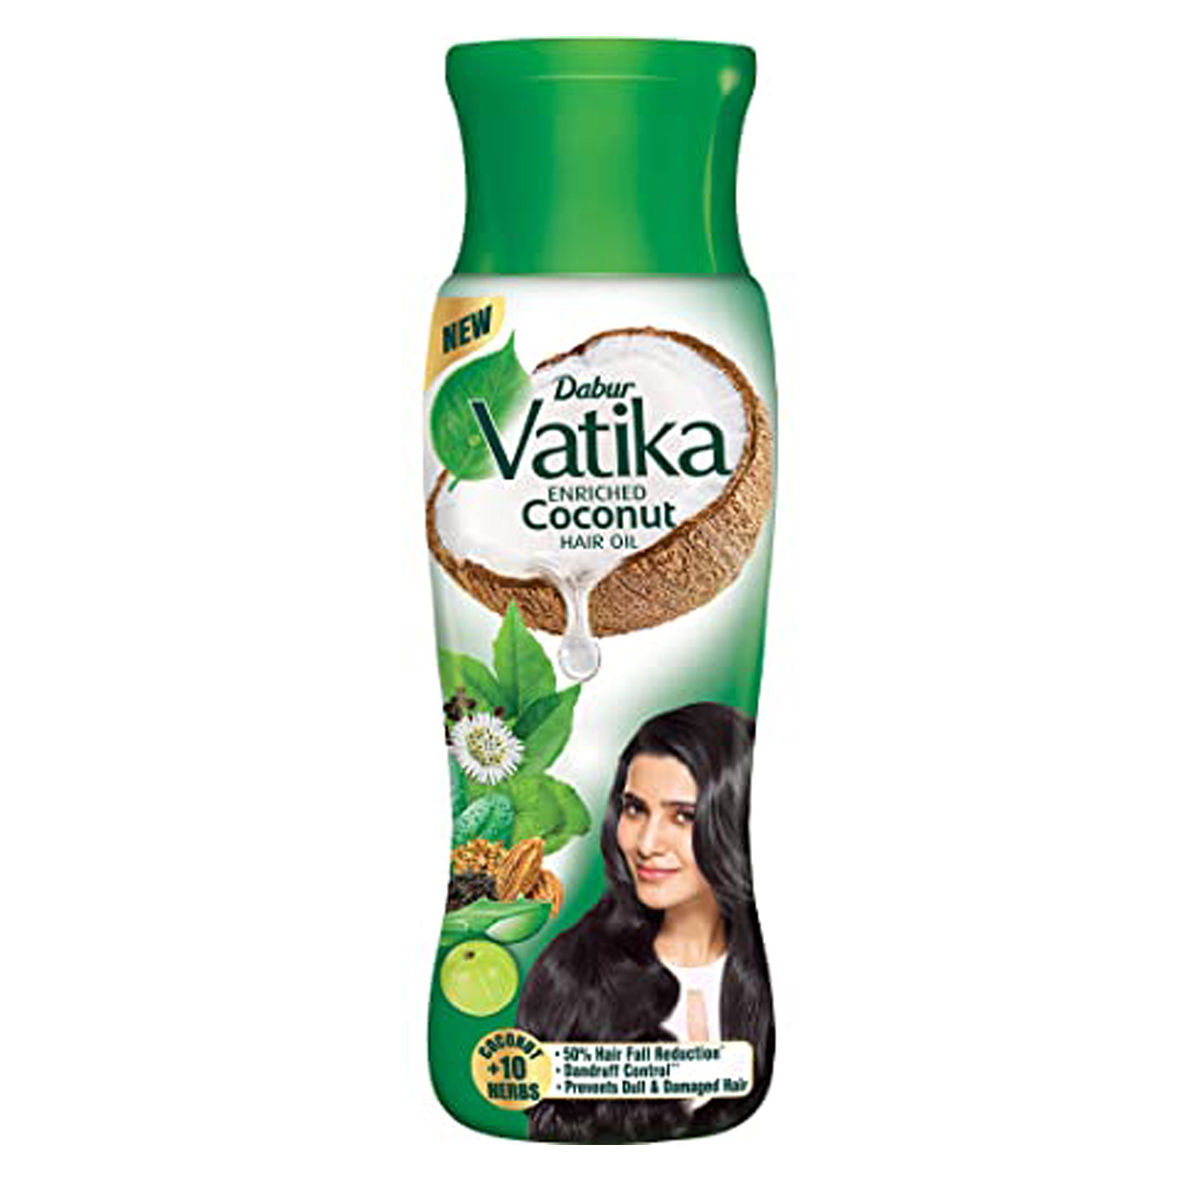 Buy Vatika Enriched Coconut Hair Oil, 75 ml Online